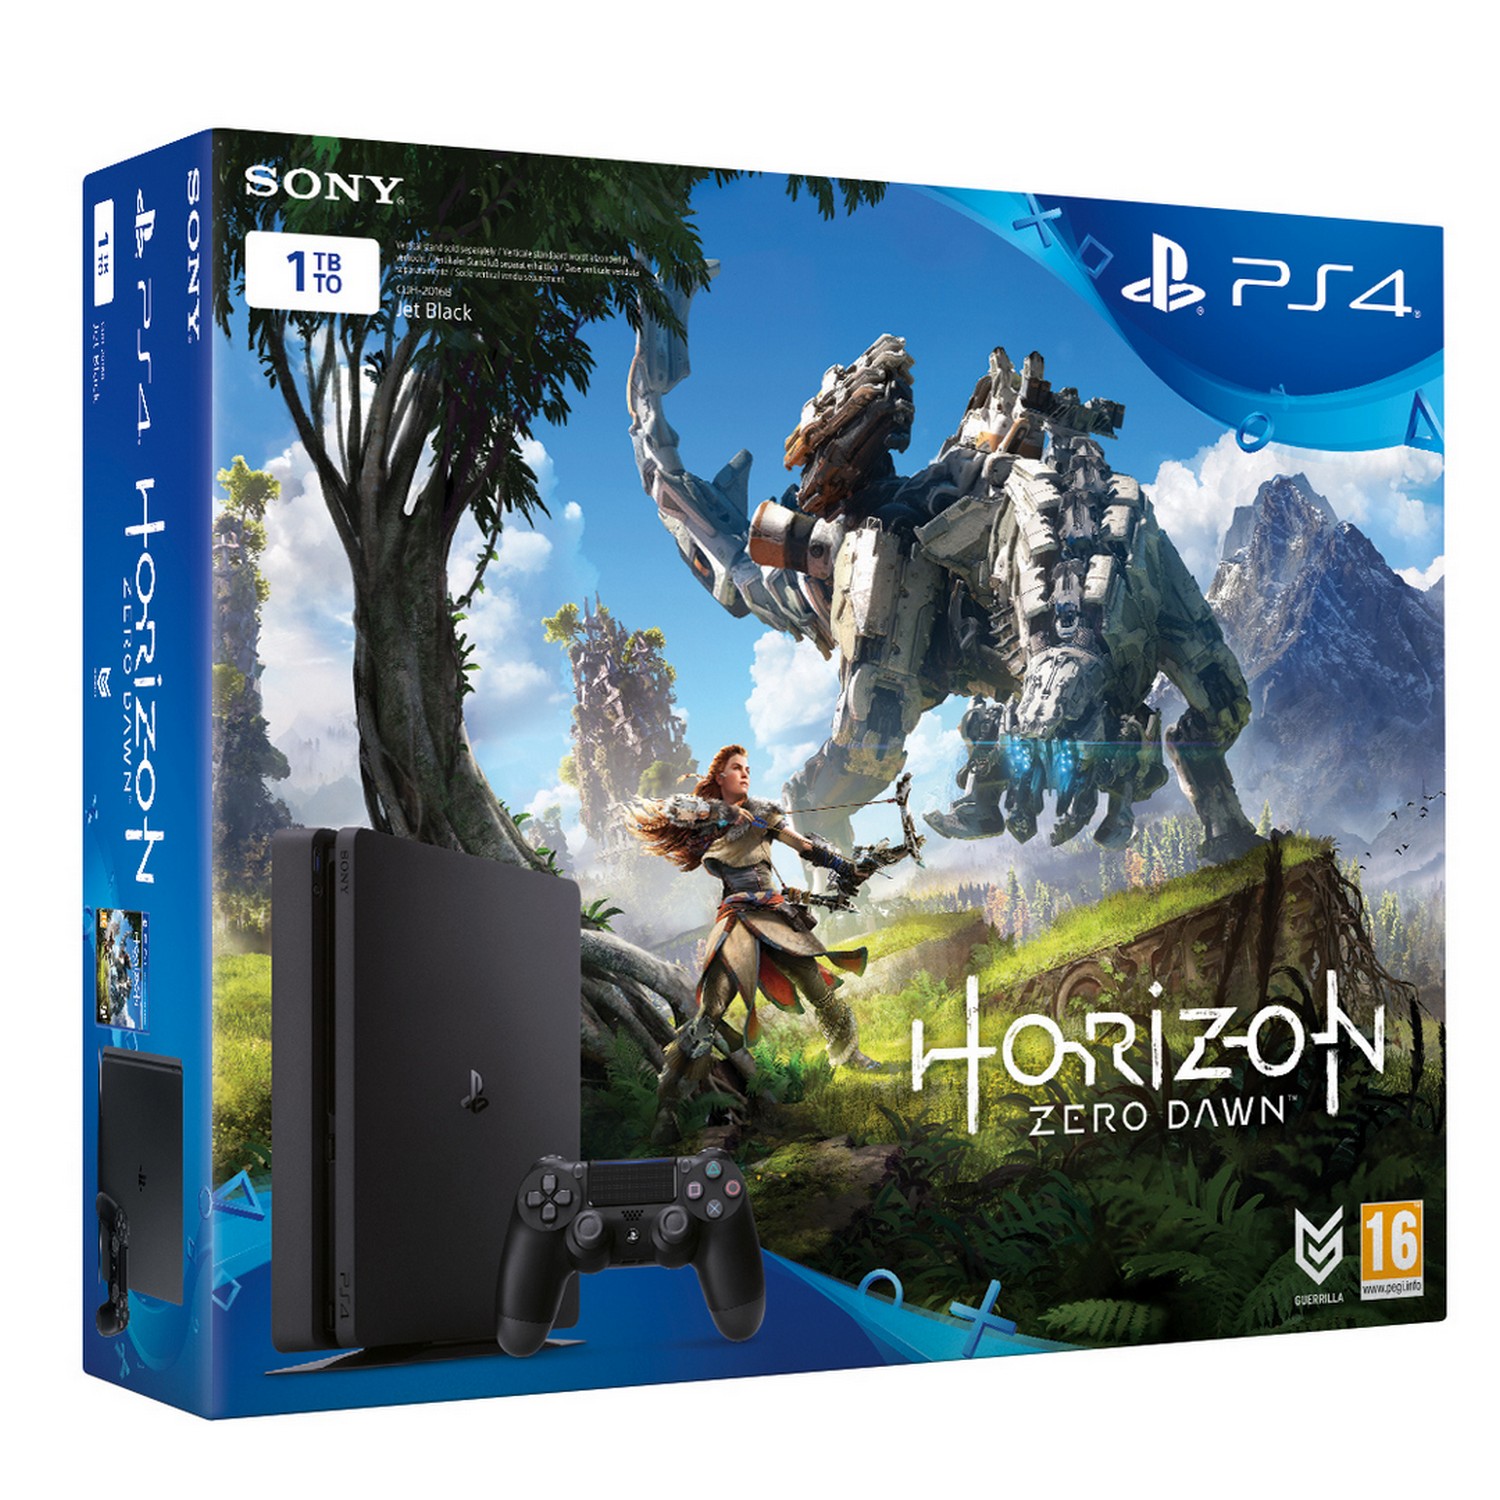 PlayStation 4 Slim 1 TB - Horizon Zero Dawn Bundle